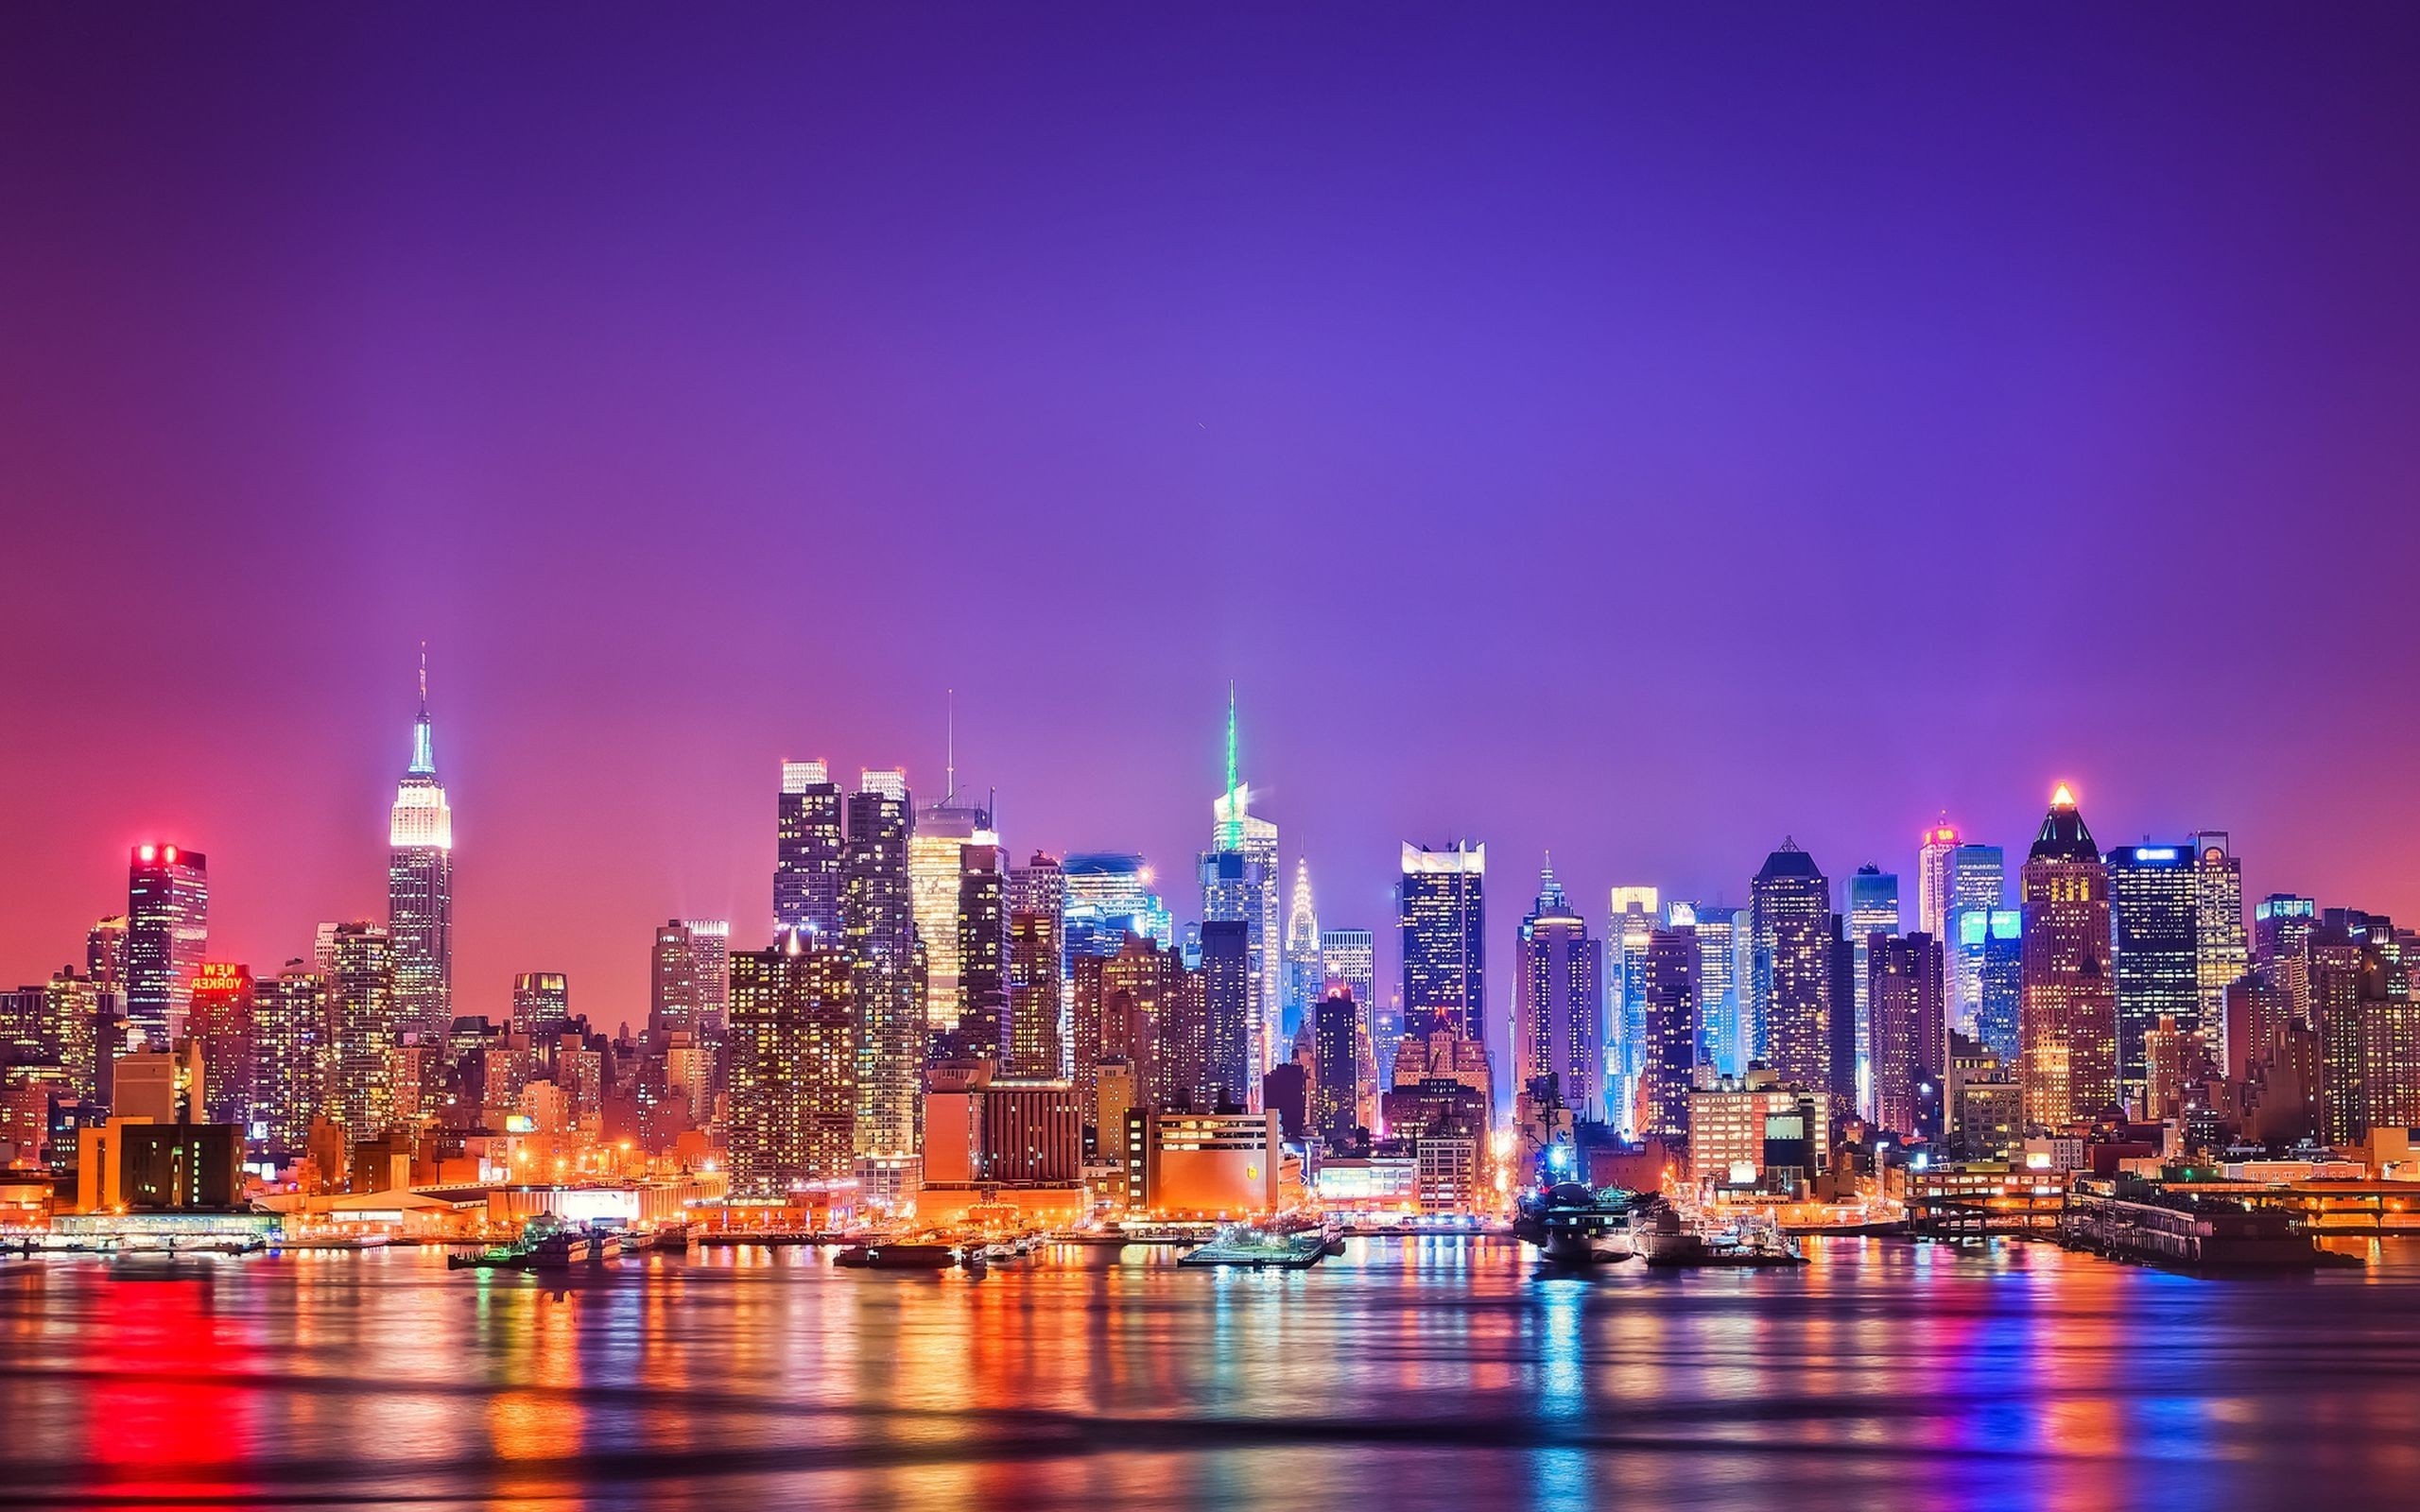 New York at Night, NYC light at night, High resolution wallpaper, 2560x1600 HD Desktop